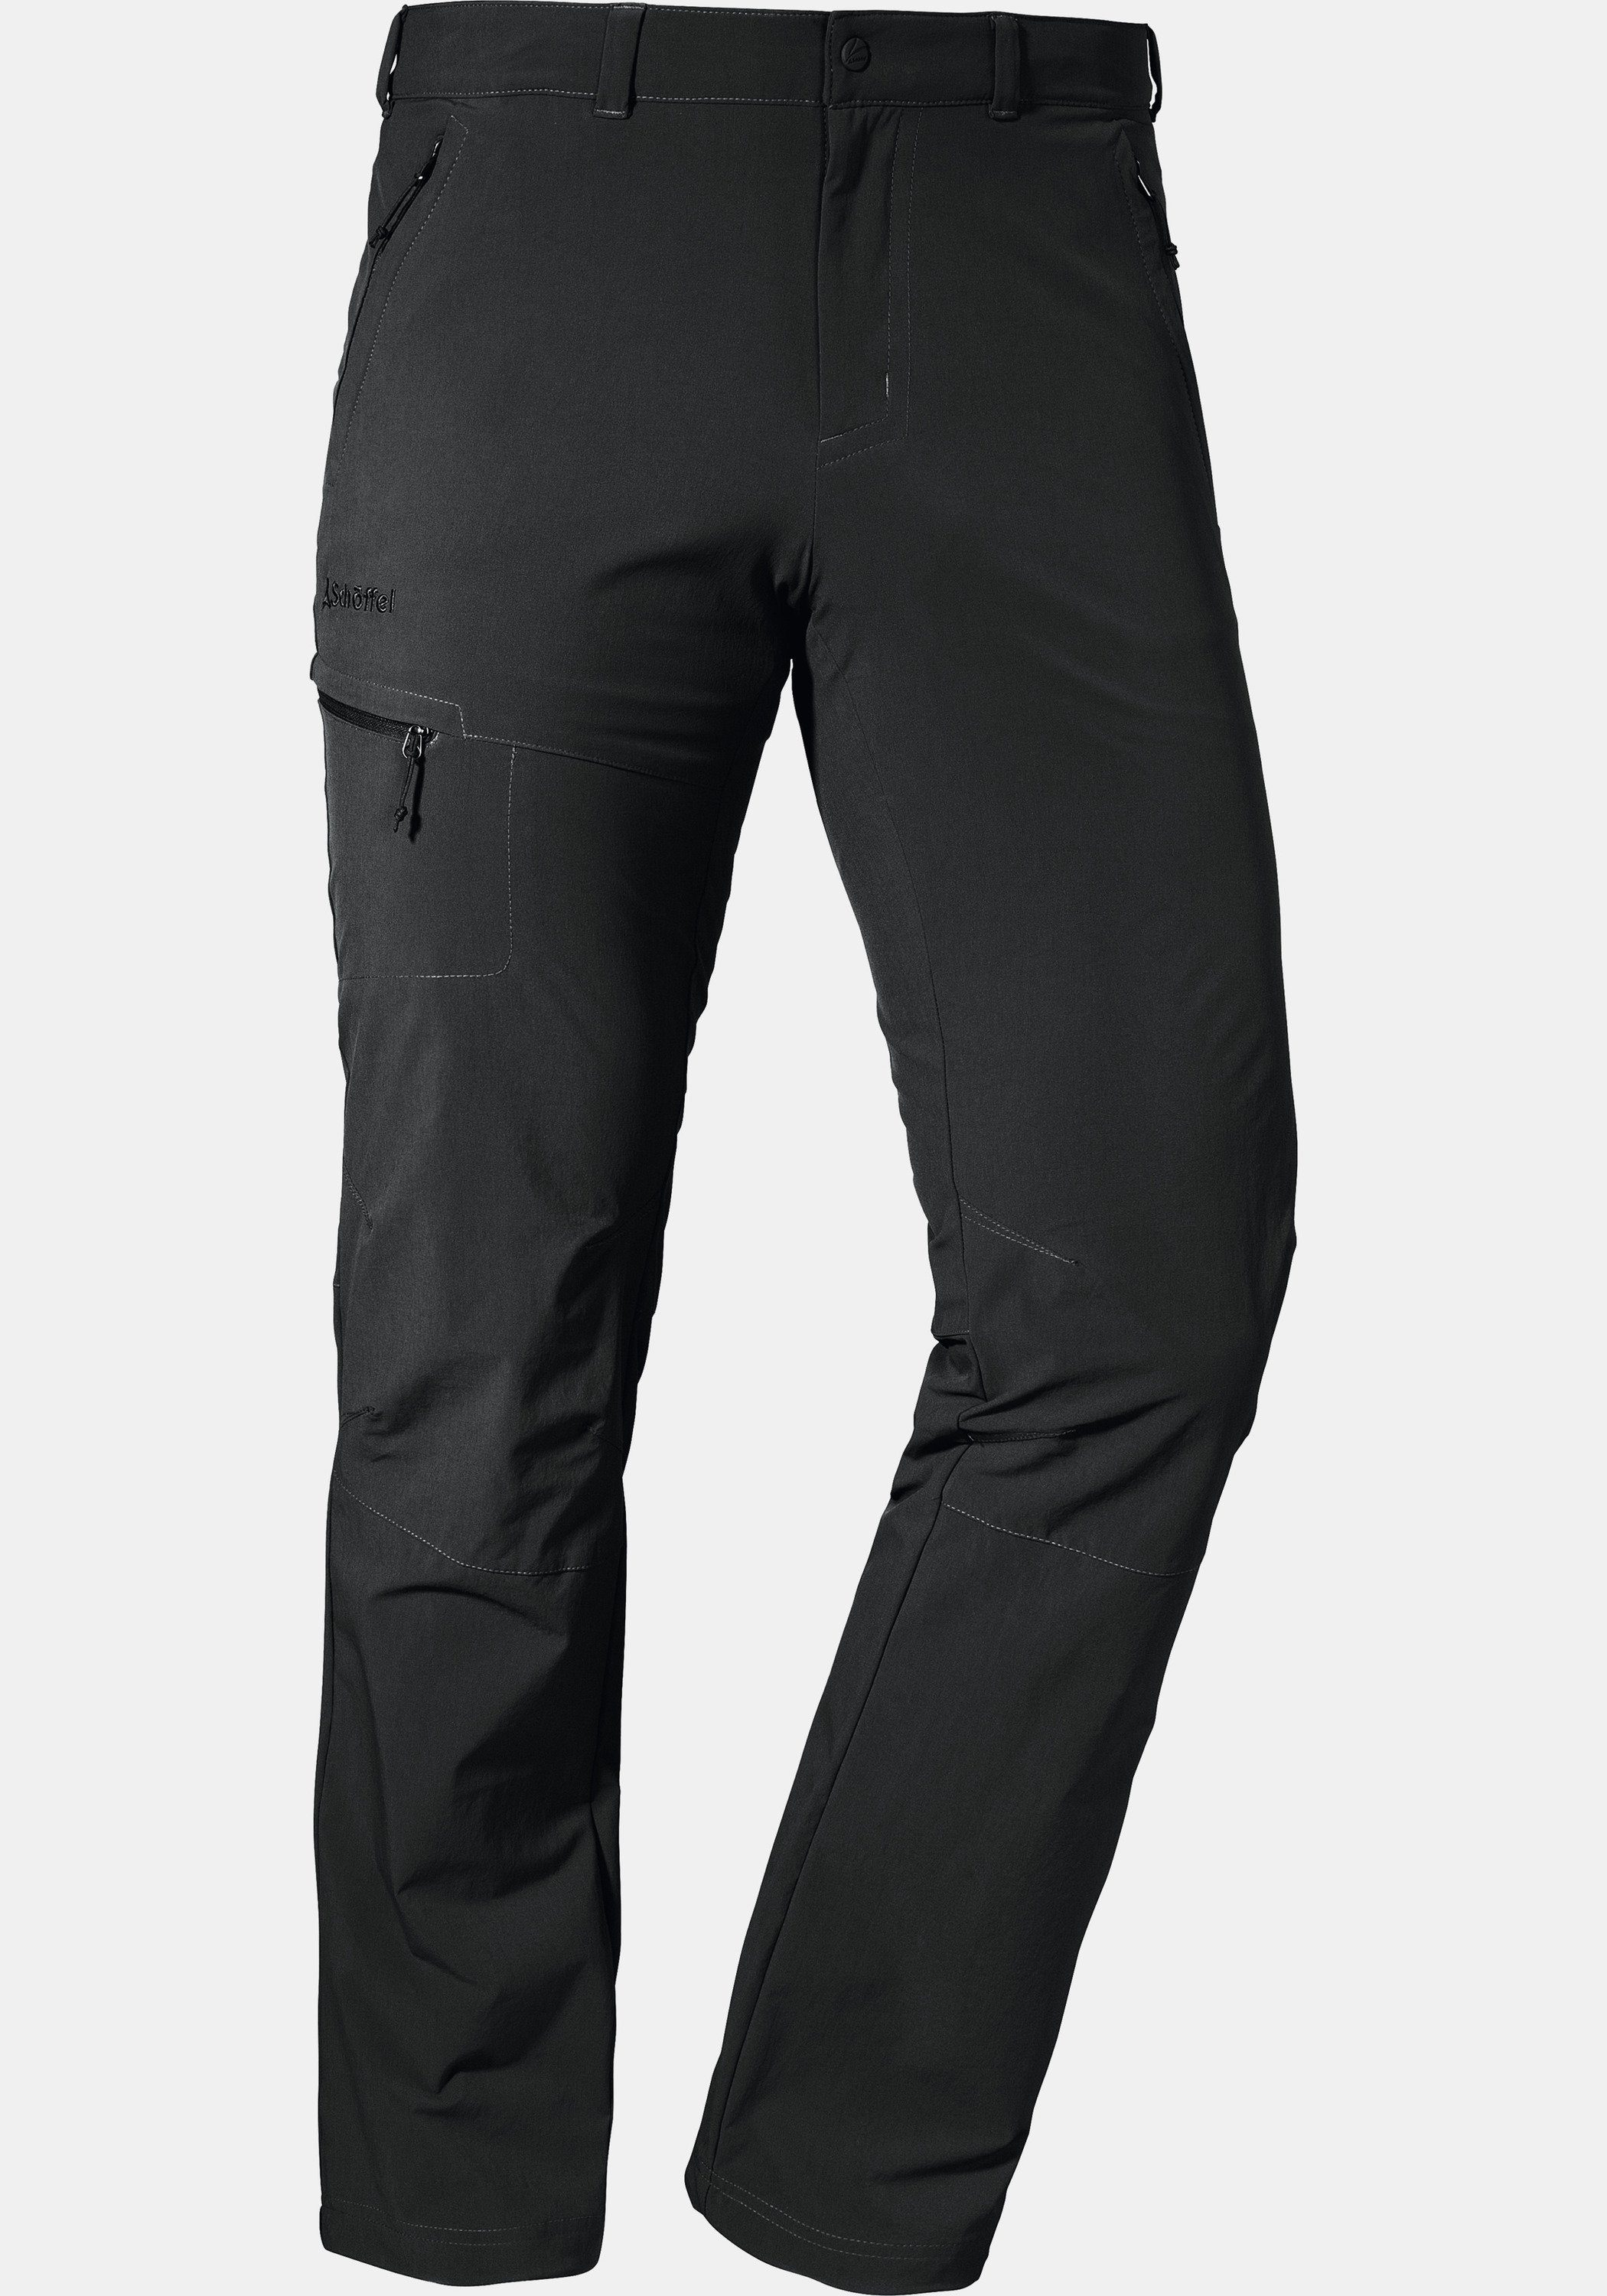 graphit Koper1 Schöffel Outdoorhose Pants